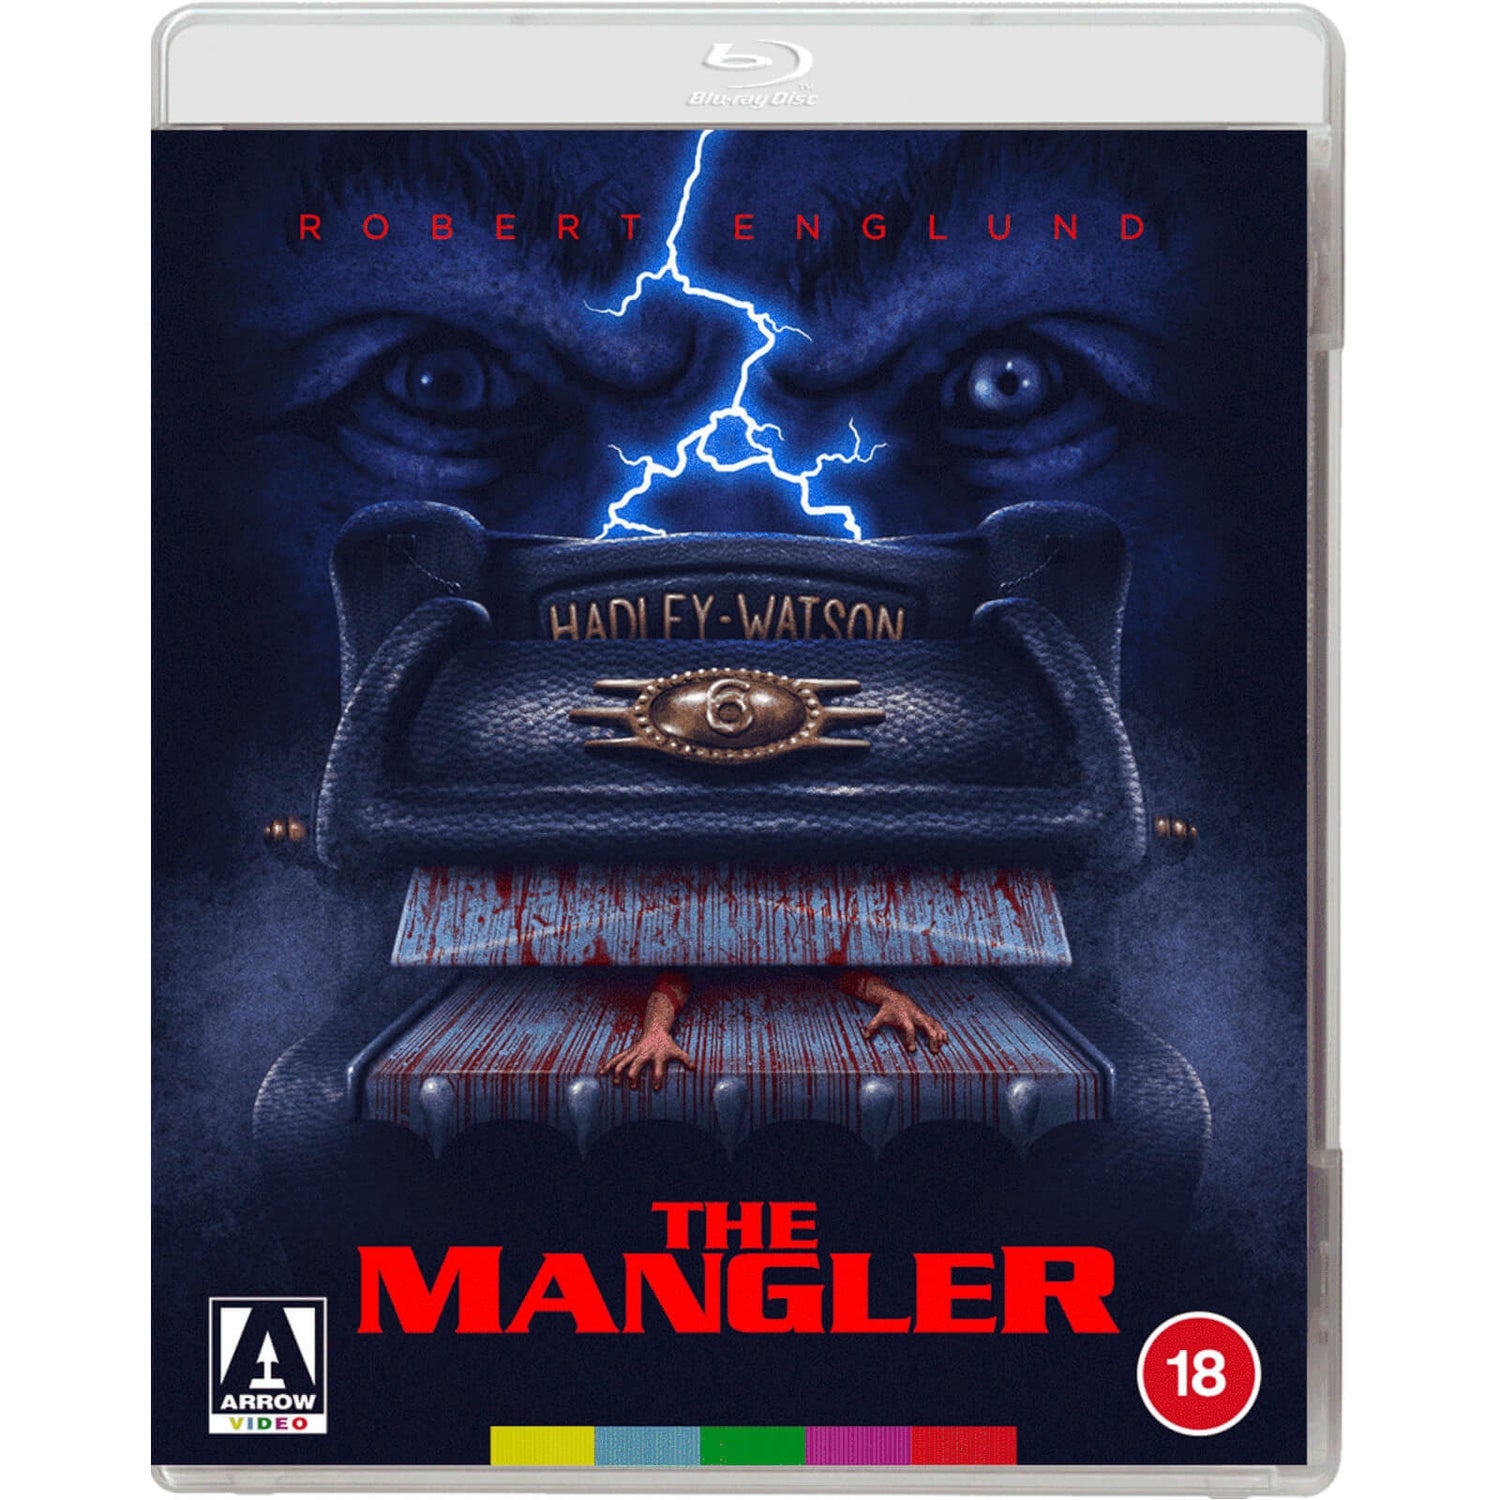 The Mangler Blu-ray